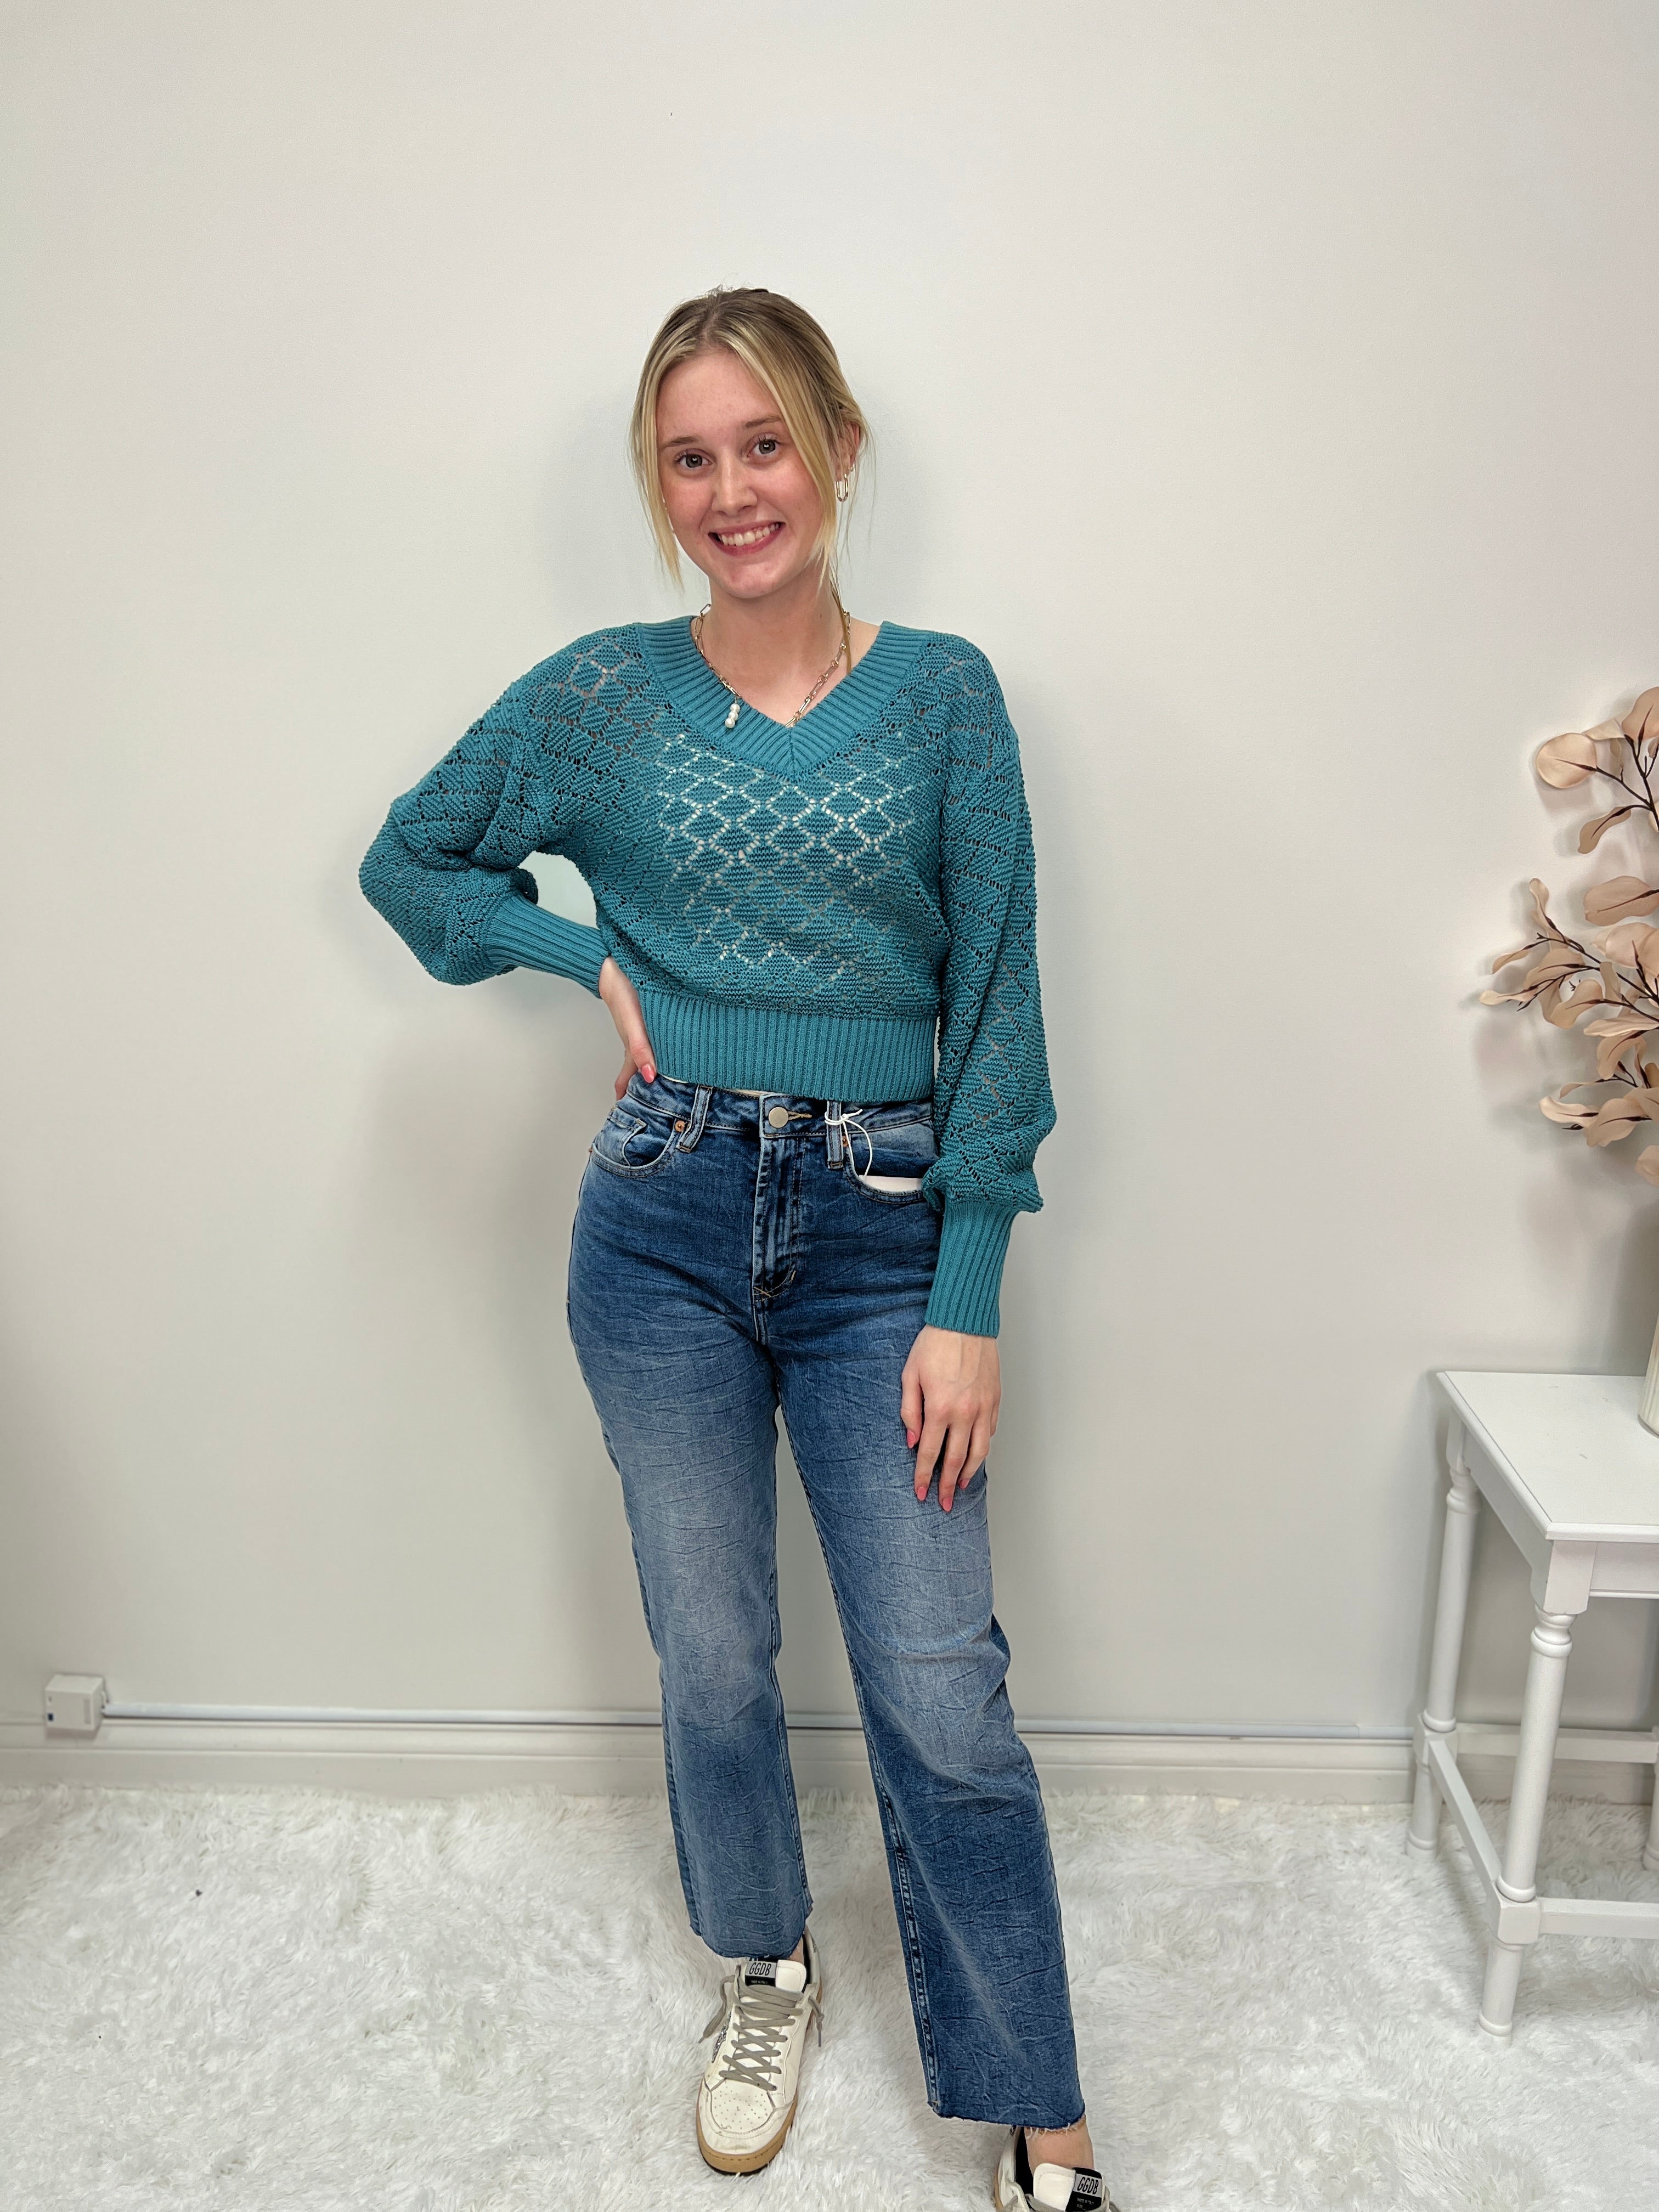 Bree Sweater-140 Sweaters, Cardigans & Sweatshirts-Simply Stylish Boutique-Simply Stylish Boutique | Women’s & Kid’s Fashion | Paducah, KY